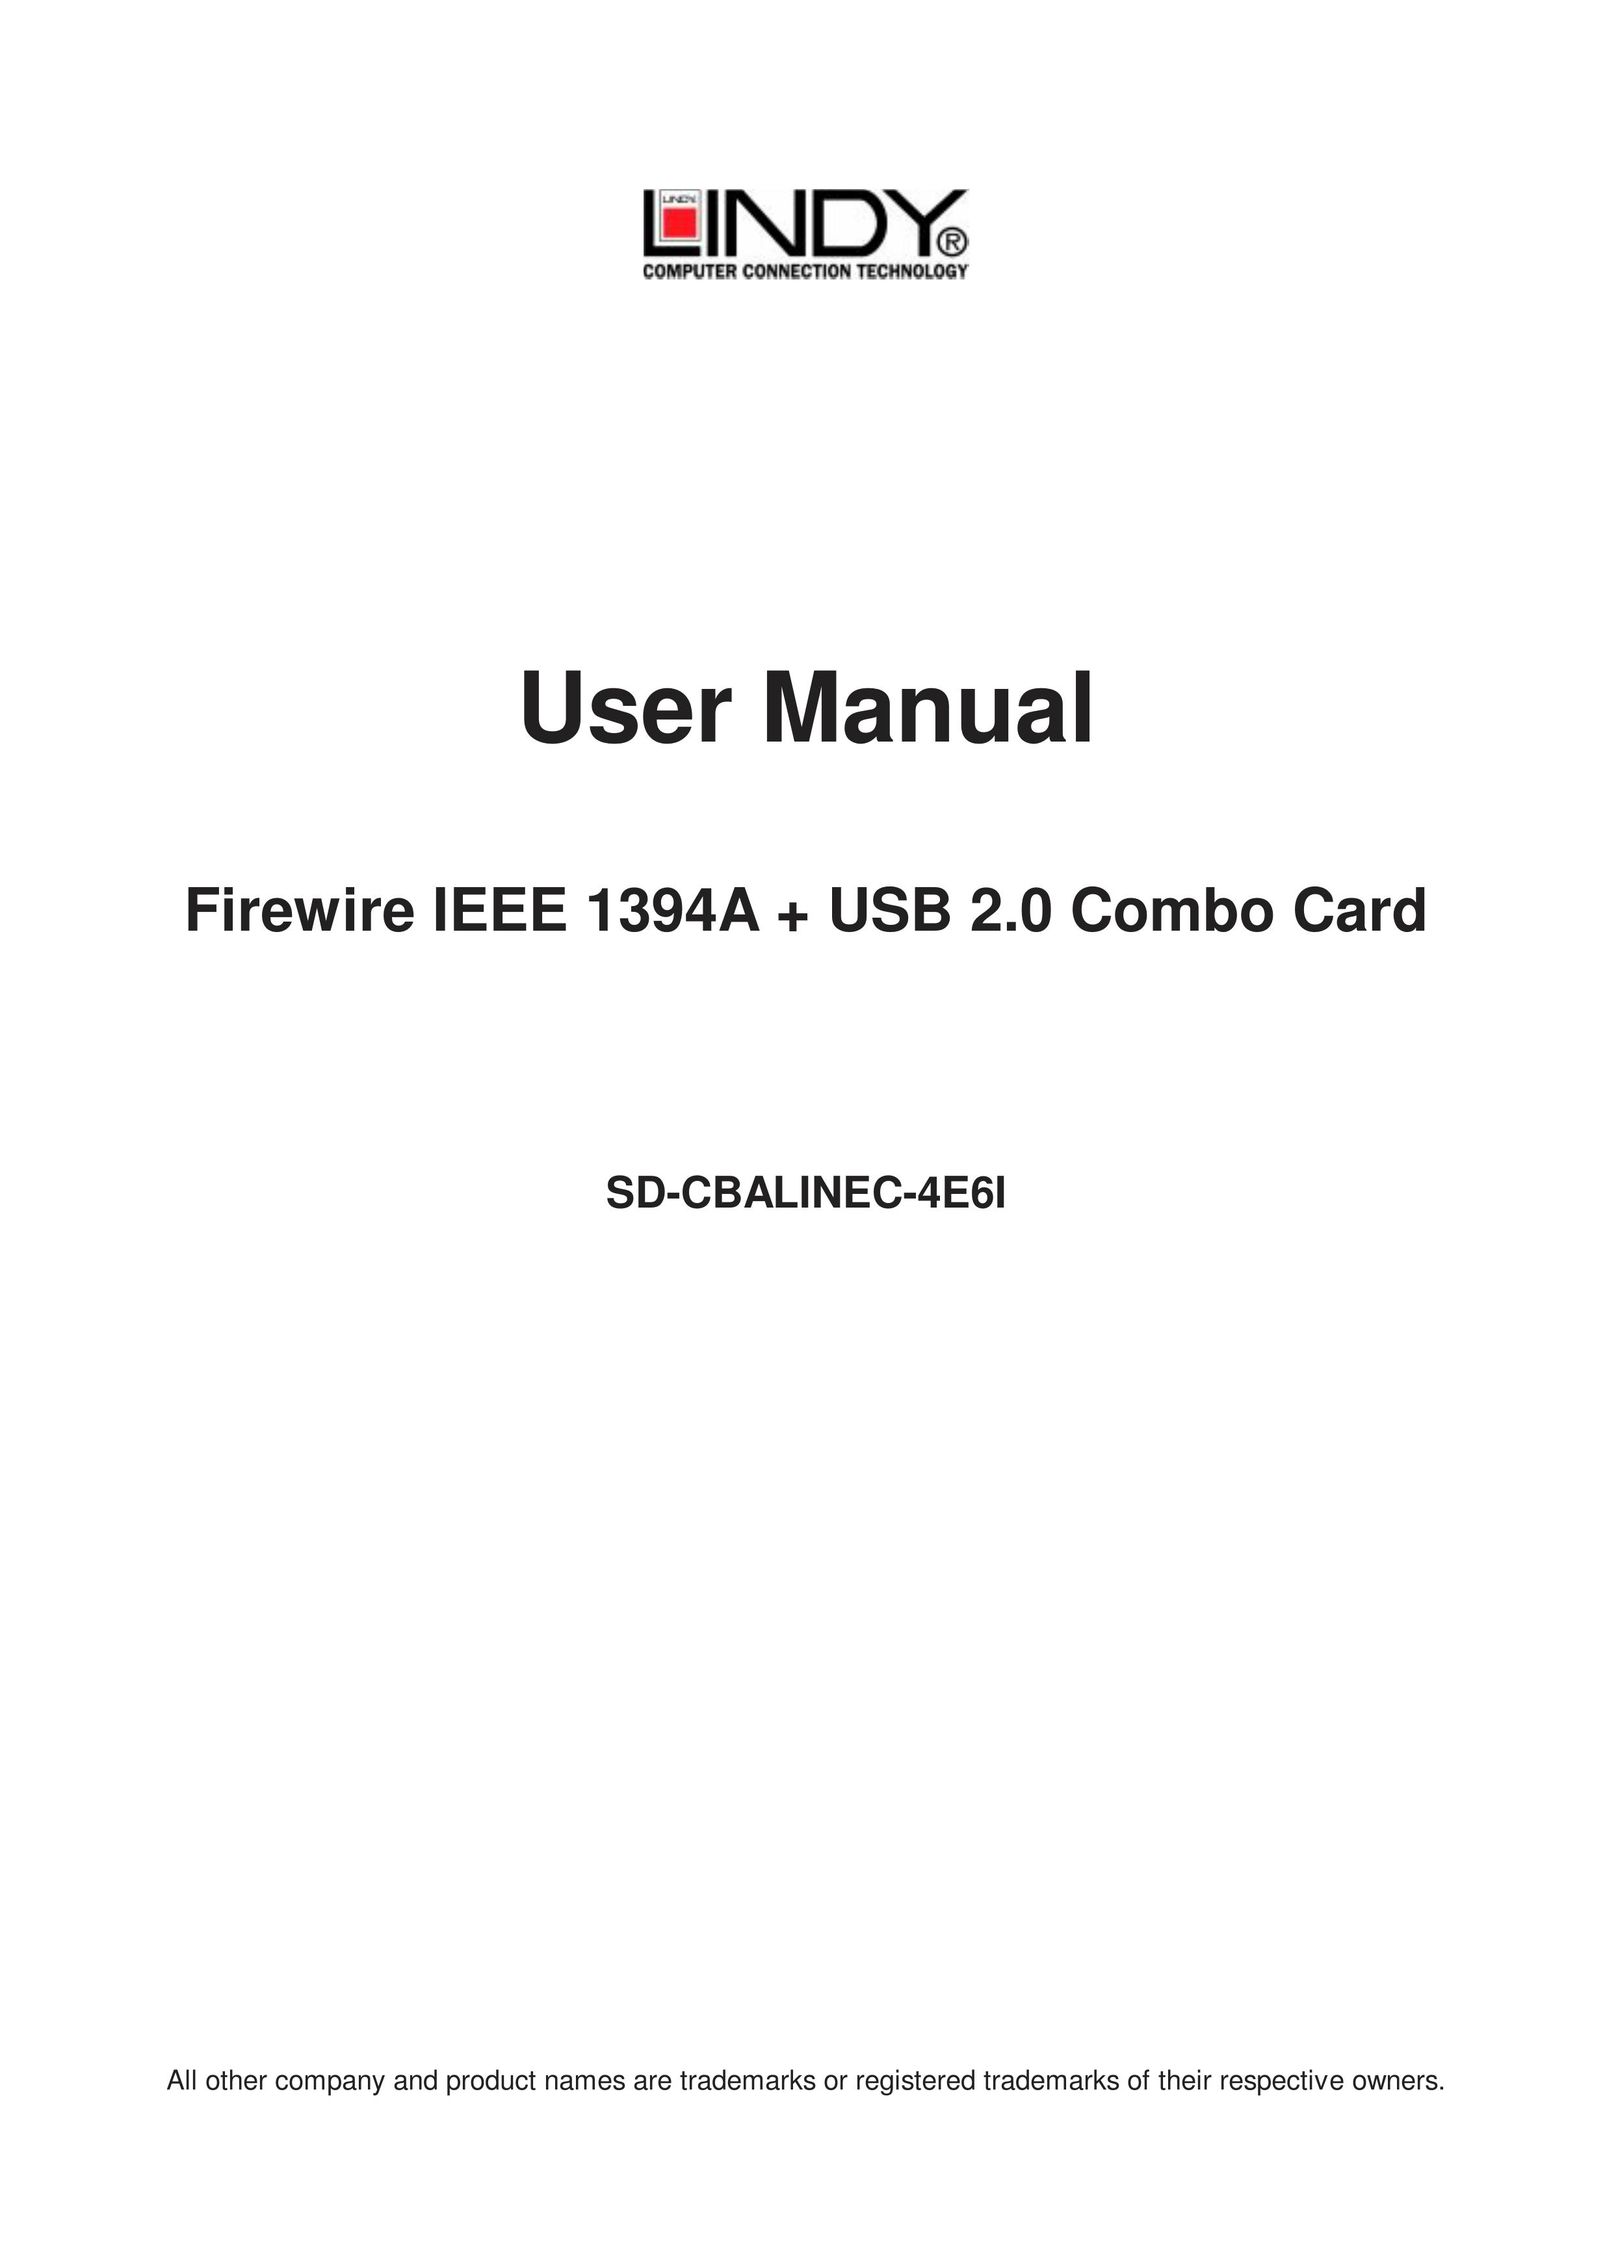 Lindy SD-CBALINEC-4E6I Computer Drive User Manual